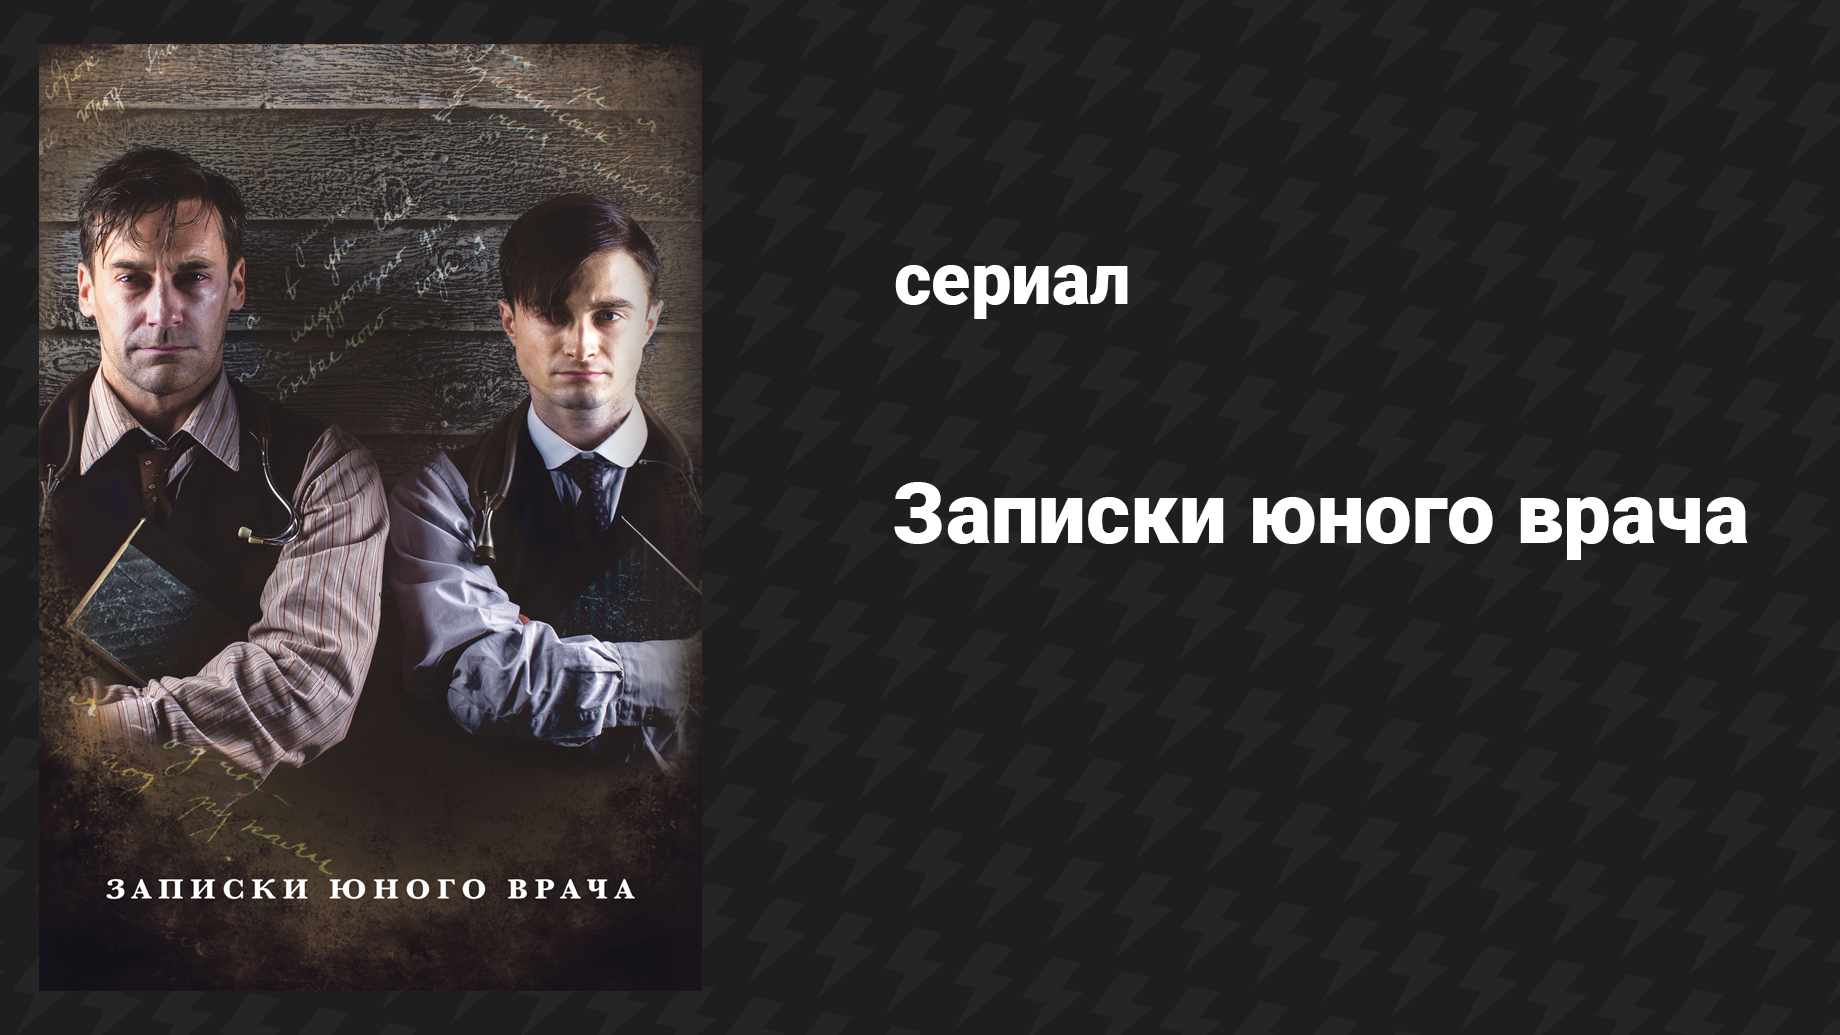 Записки юного врача 1 сезон 4 серия (сериал, 2012)